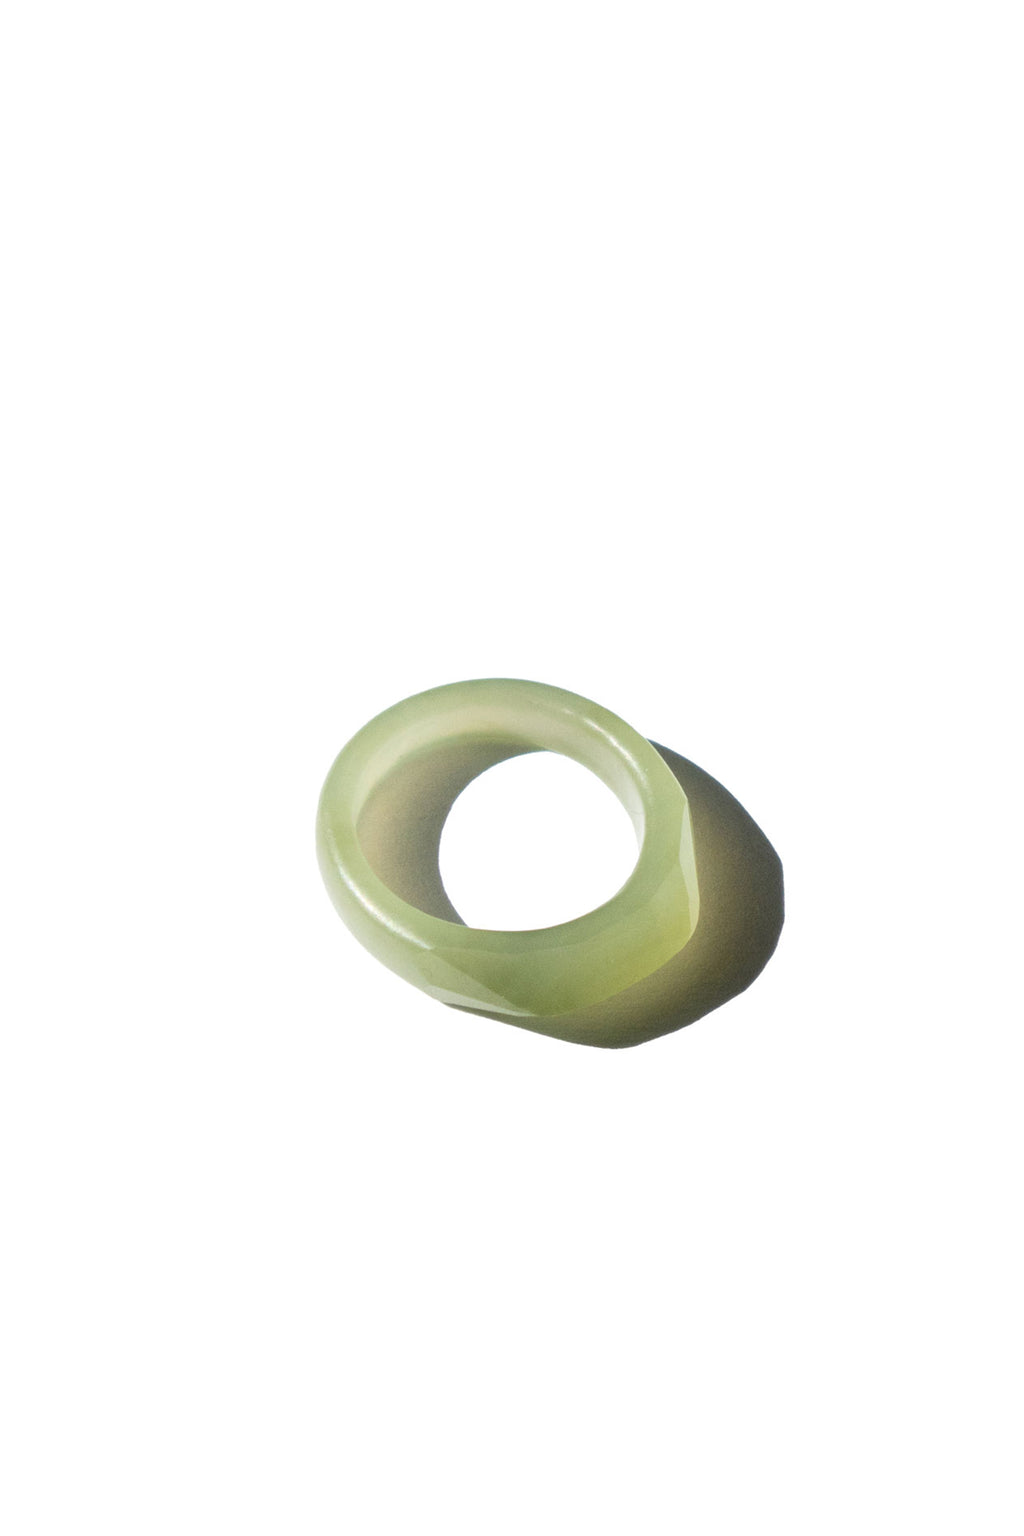 seree-dia-ring-diamond-shape-structured-nephrite-green-jade-ring-1